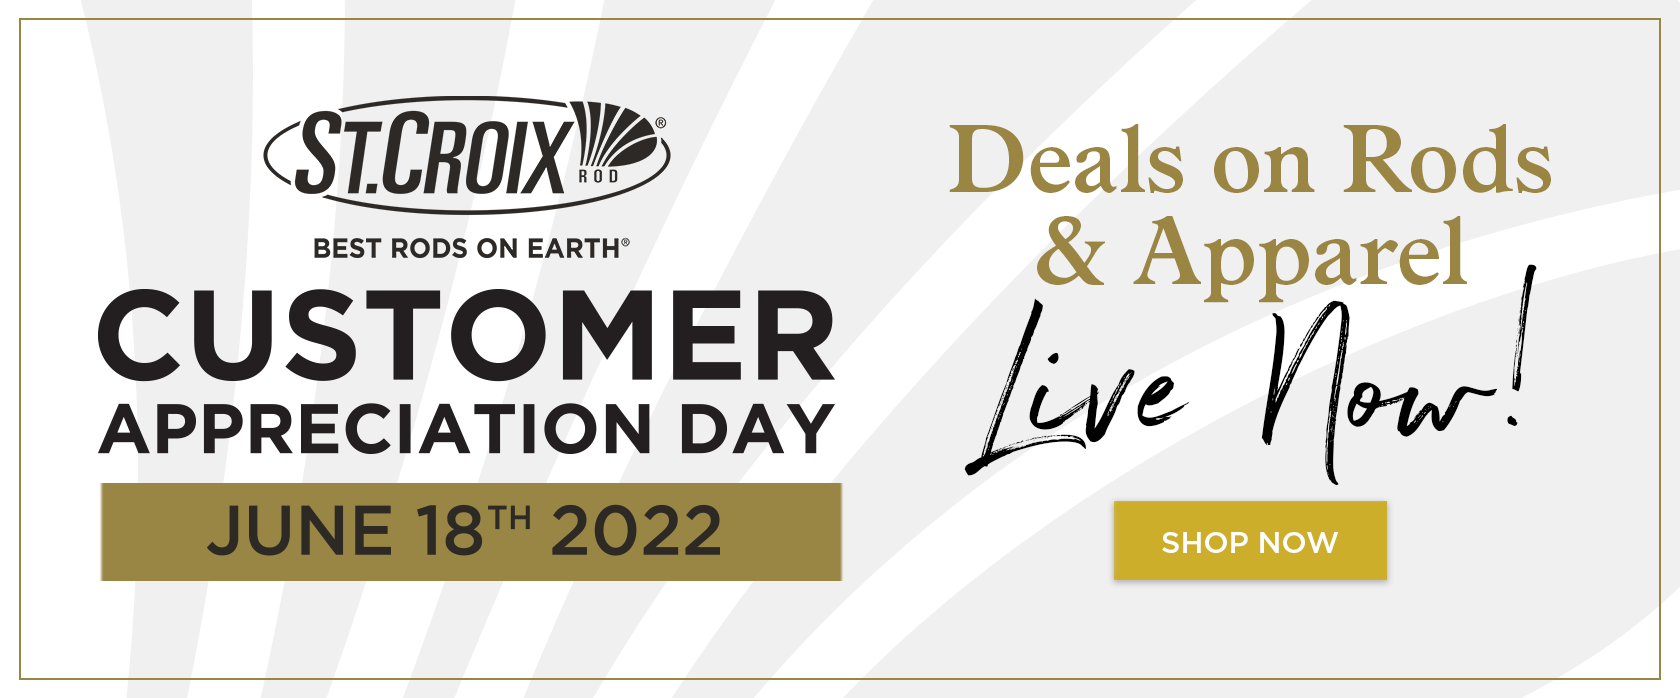 Customer Appreciation Day 2022 - St. Croix Rod